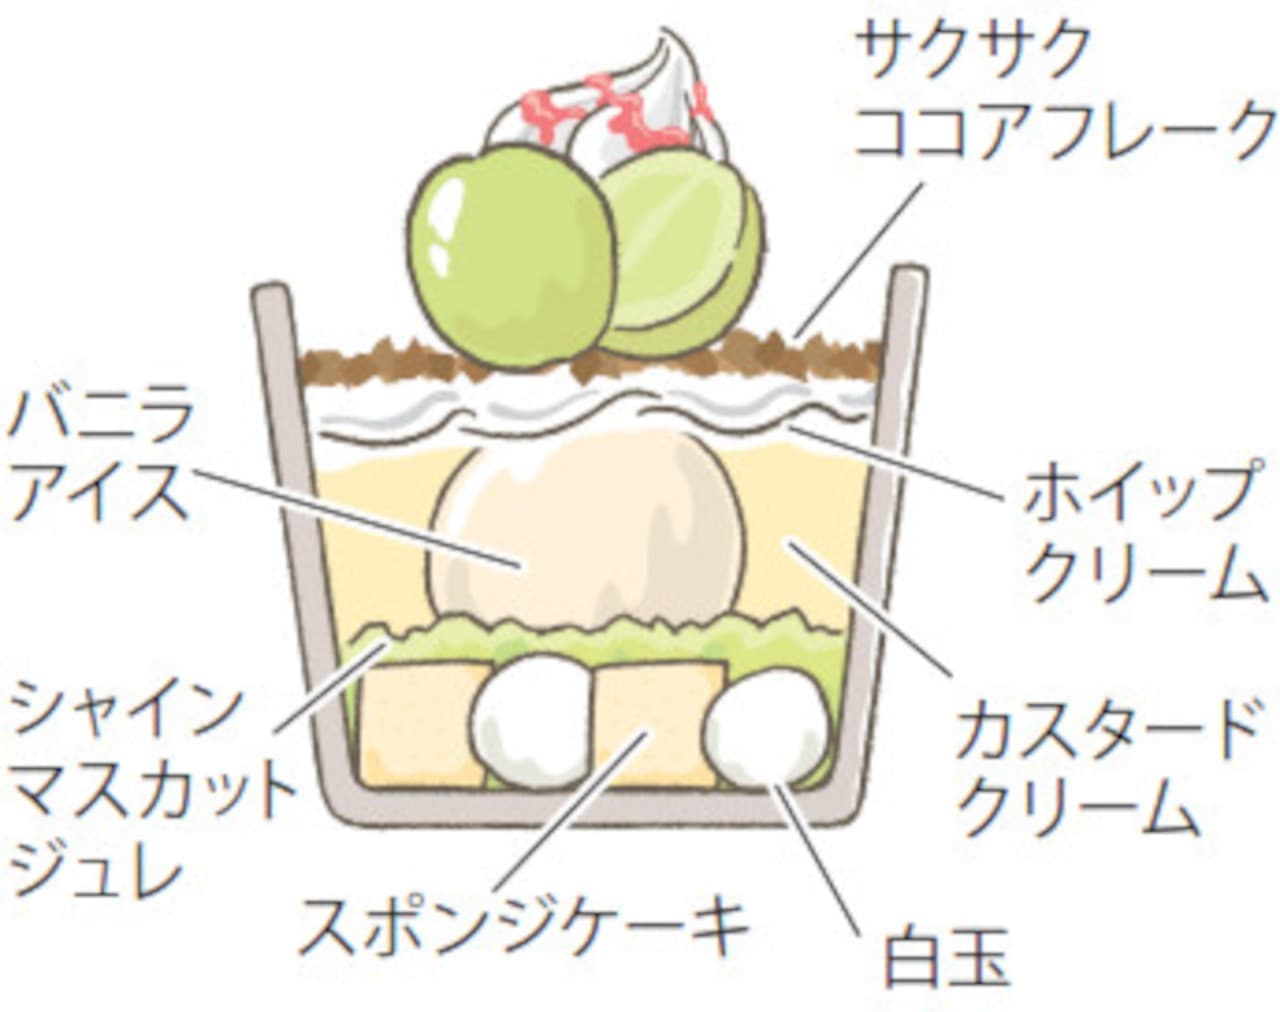 Japanese Cuisine SATO "Early Autumn Cheinmuscat Parfait", "Cheinmuscat Dolce", "Cheinmuscat and Black Tea Chiffon Cake".